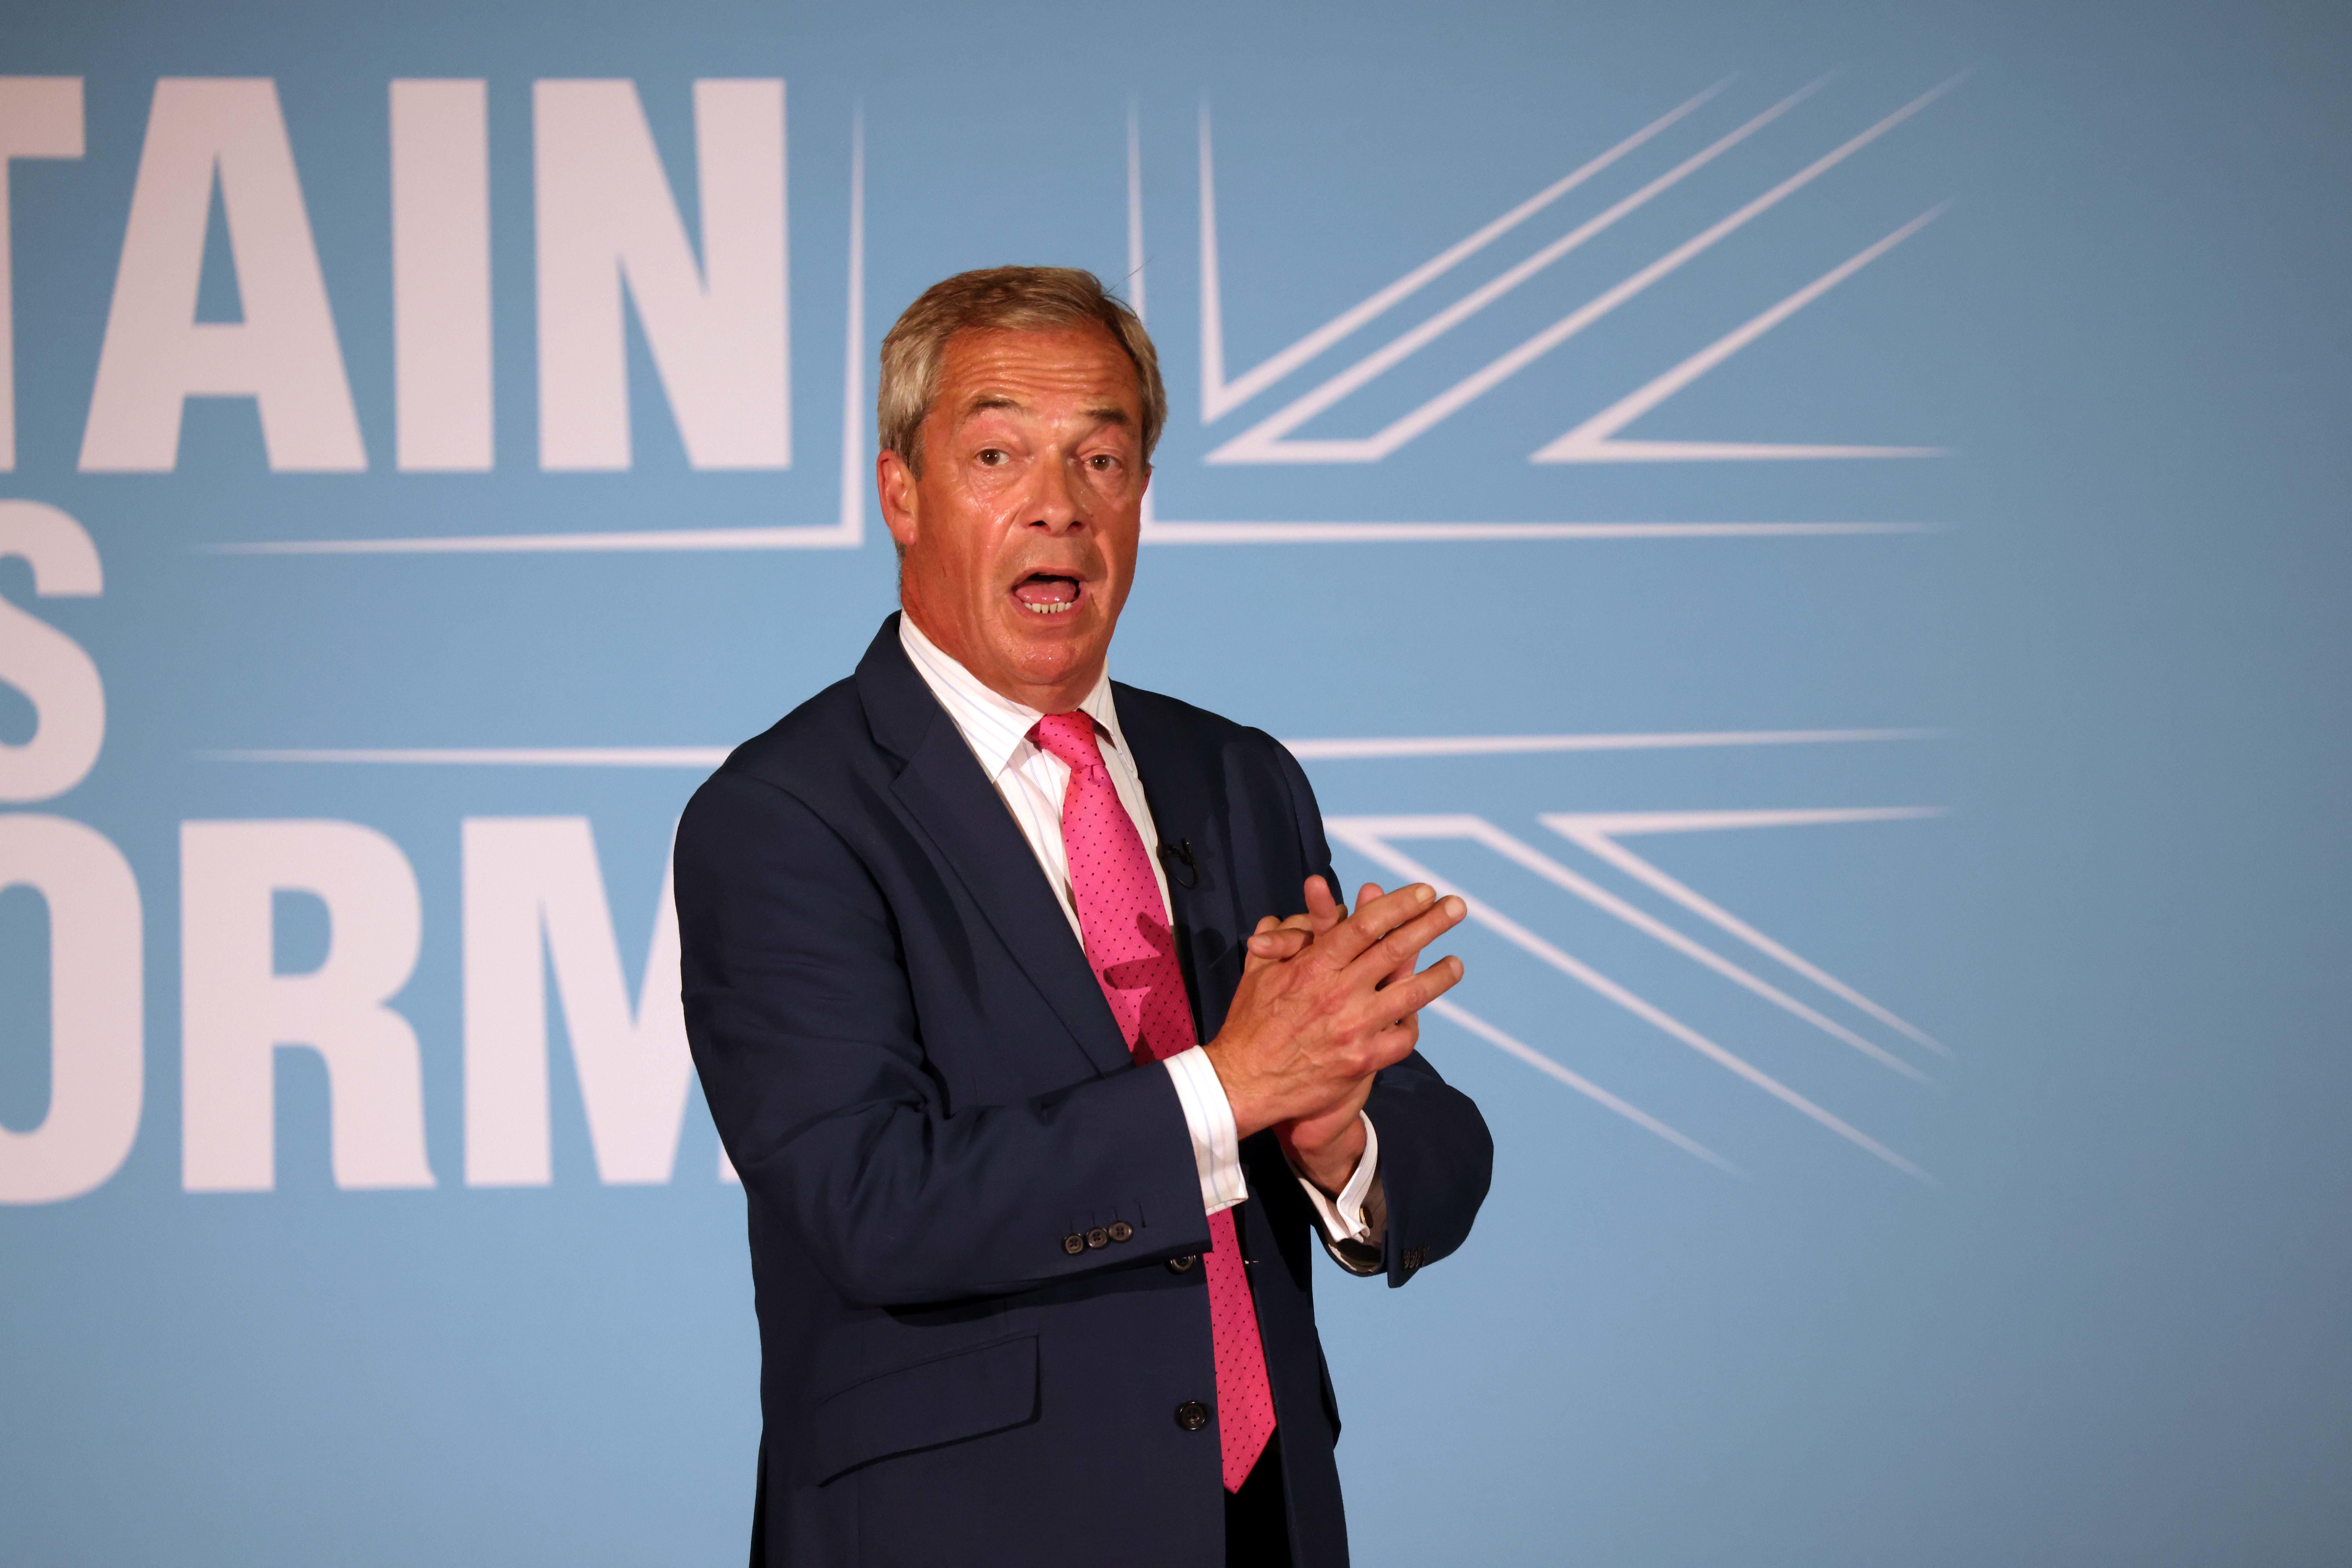 Reform UK Leader Nigel Farage said there were ‘a few bad apples’ (PA)